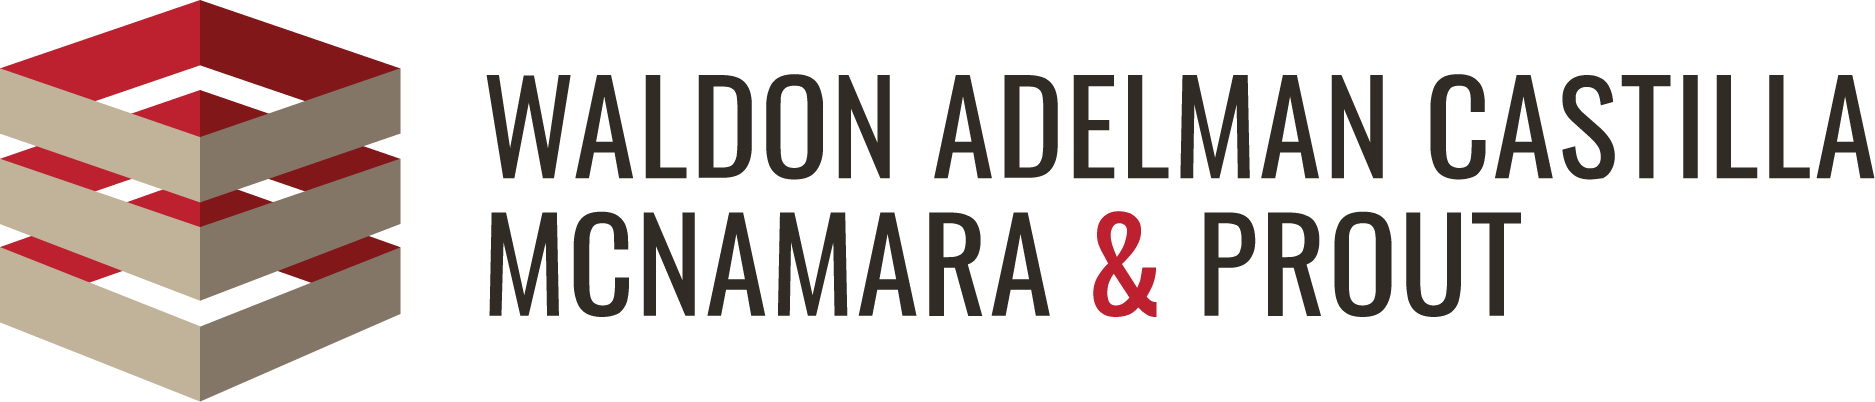 Waldon Adelman Castilla McNamara & Prout logo